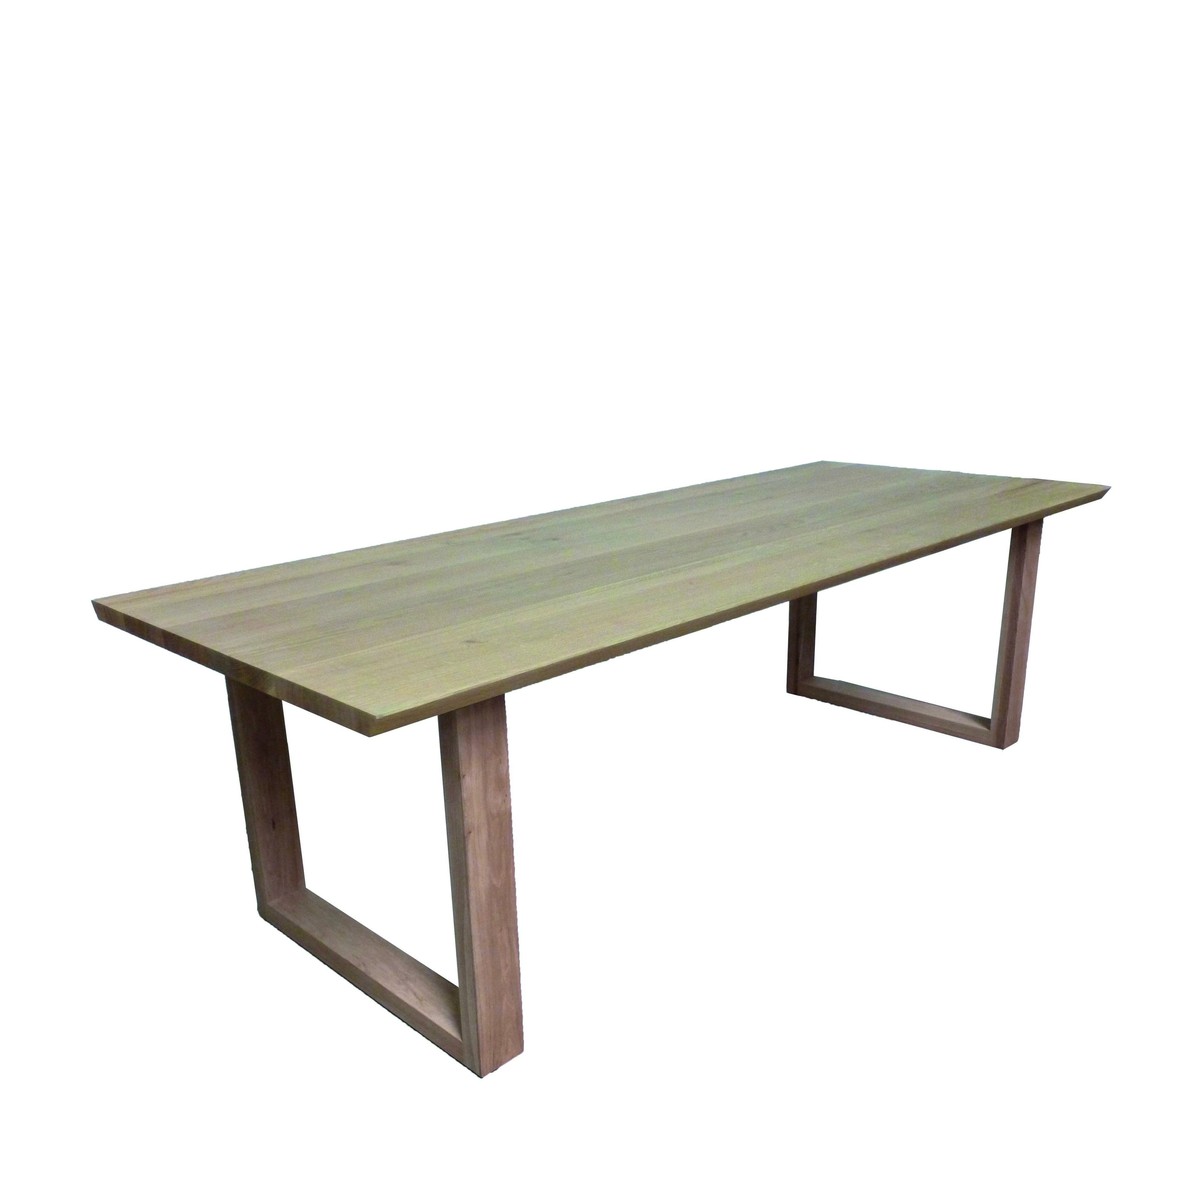   Table haute Ralf Seven rectangulaire  160x100x90cm